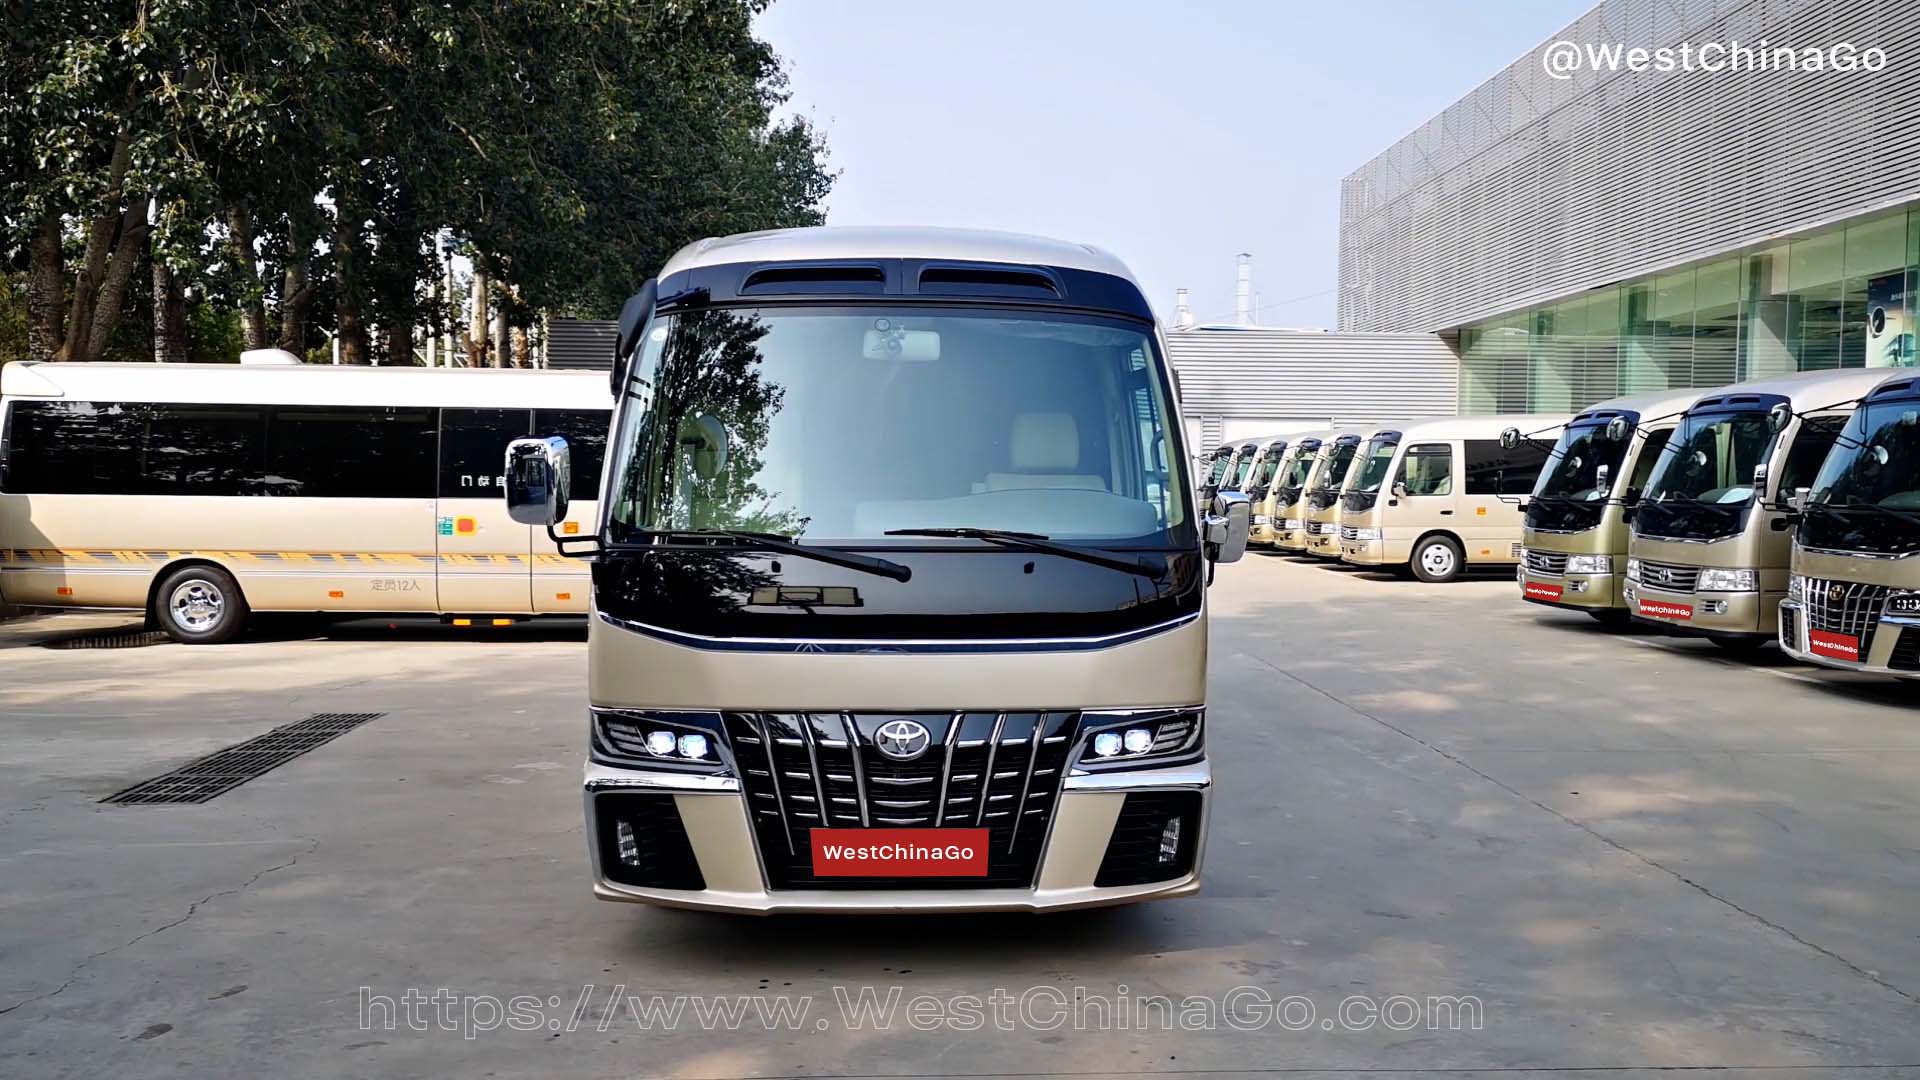 Gansu Lanzhou Tour Transfer: Car Rental With Driver